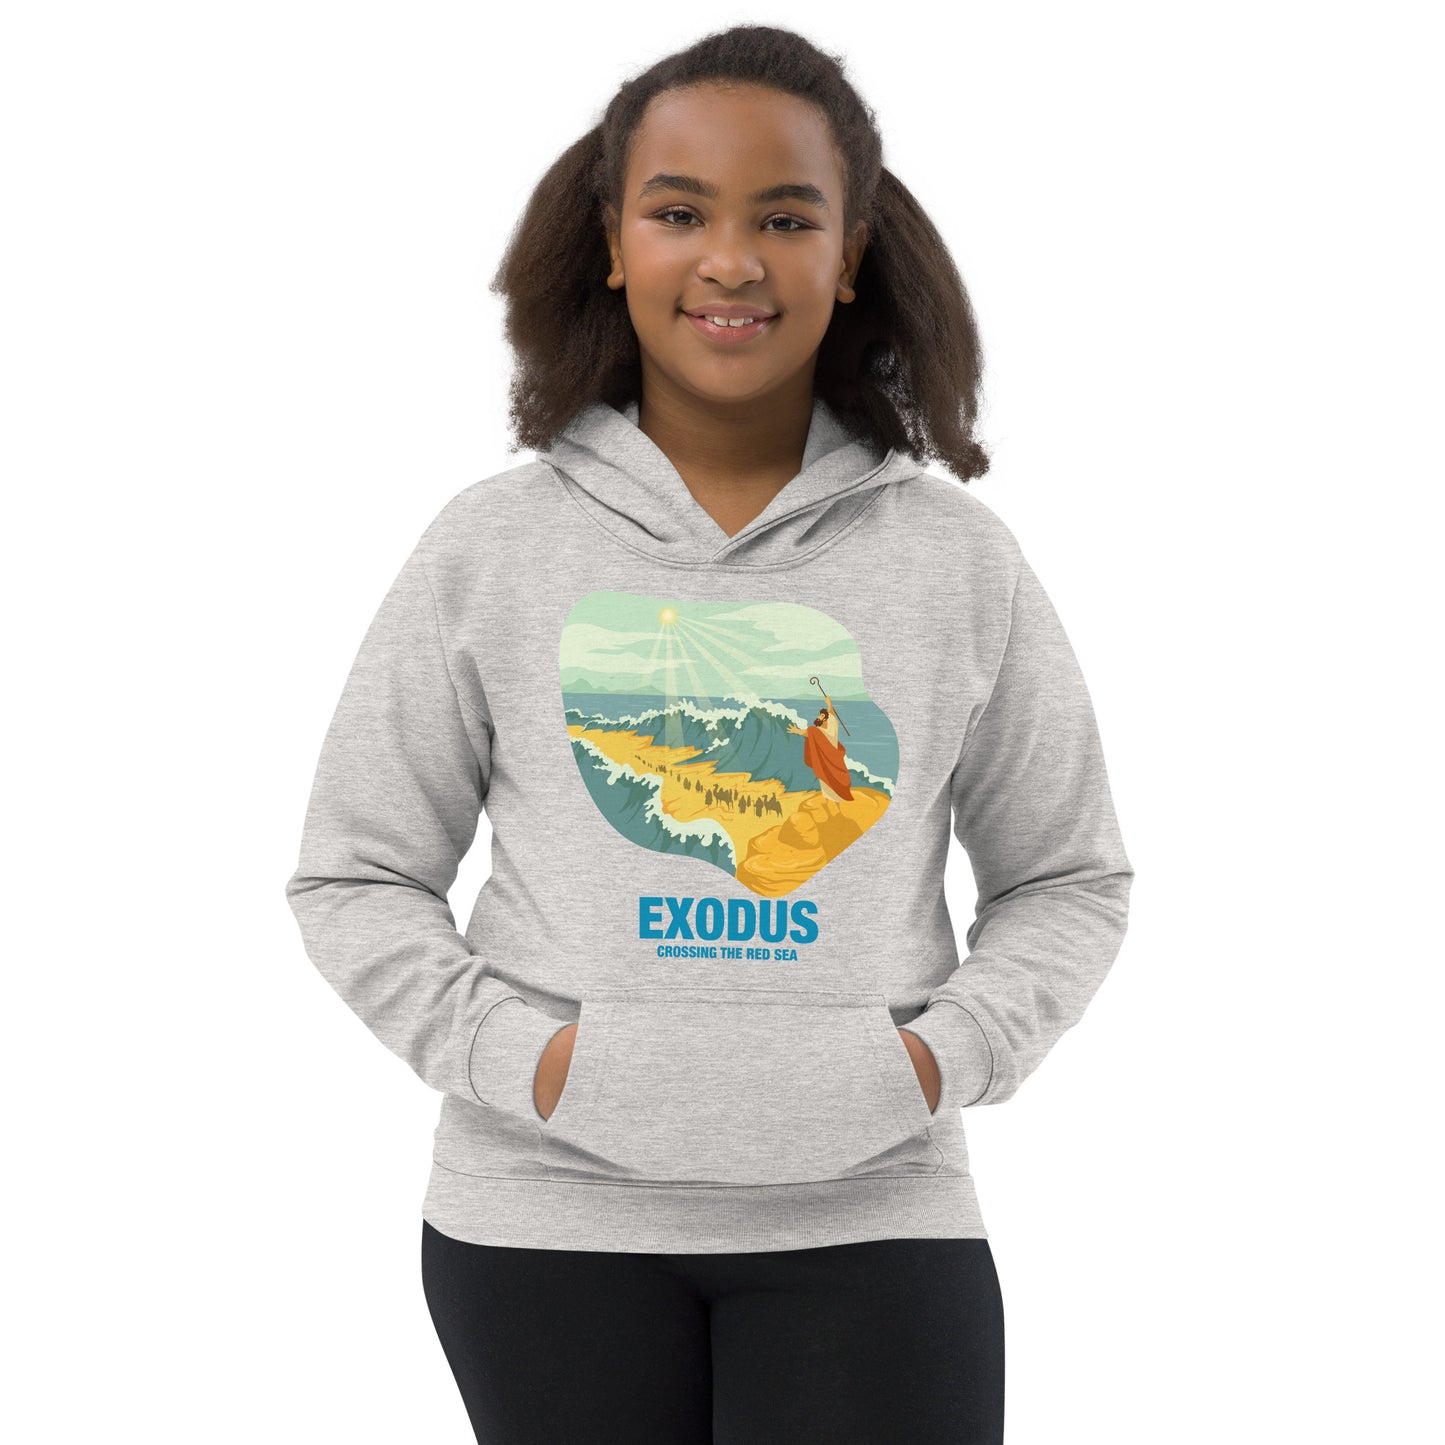 Exodus Kids Hoodie